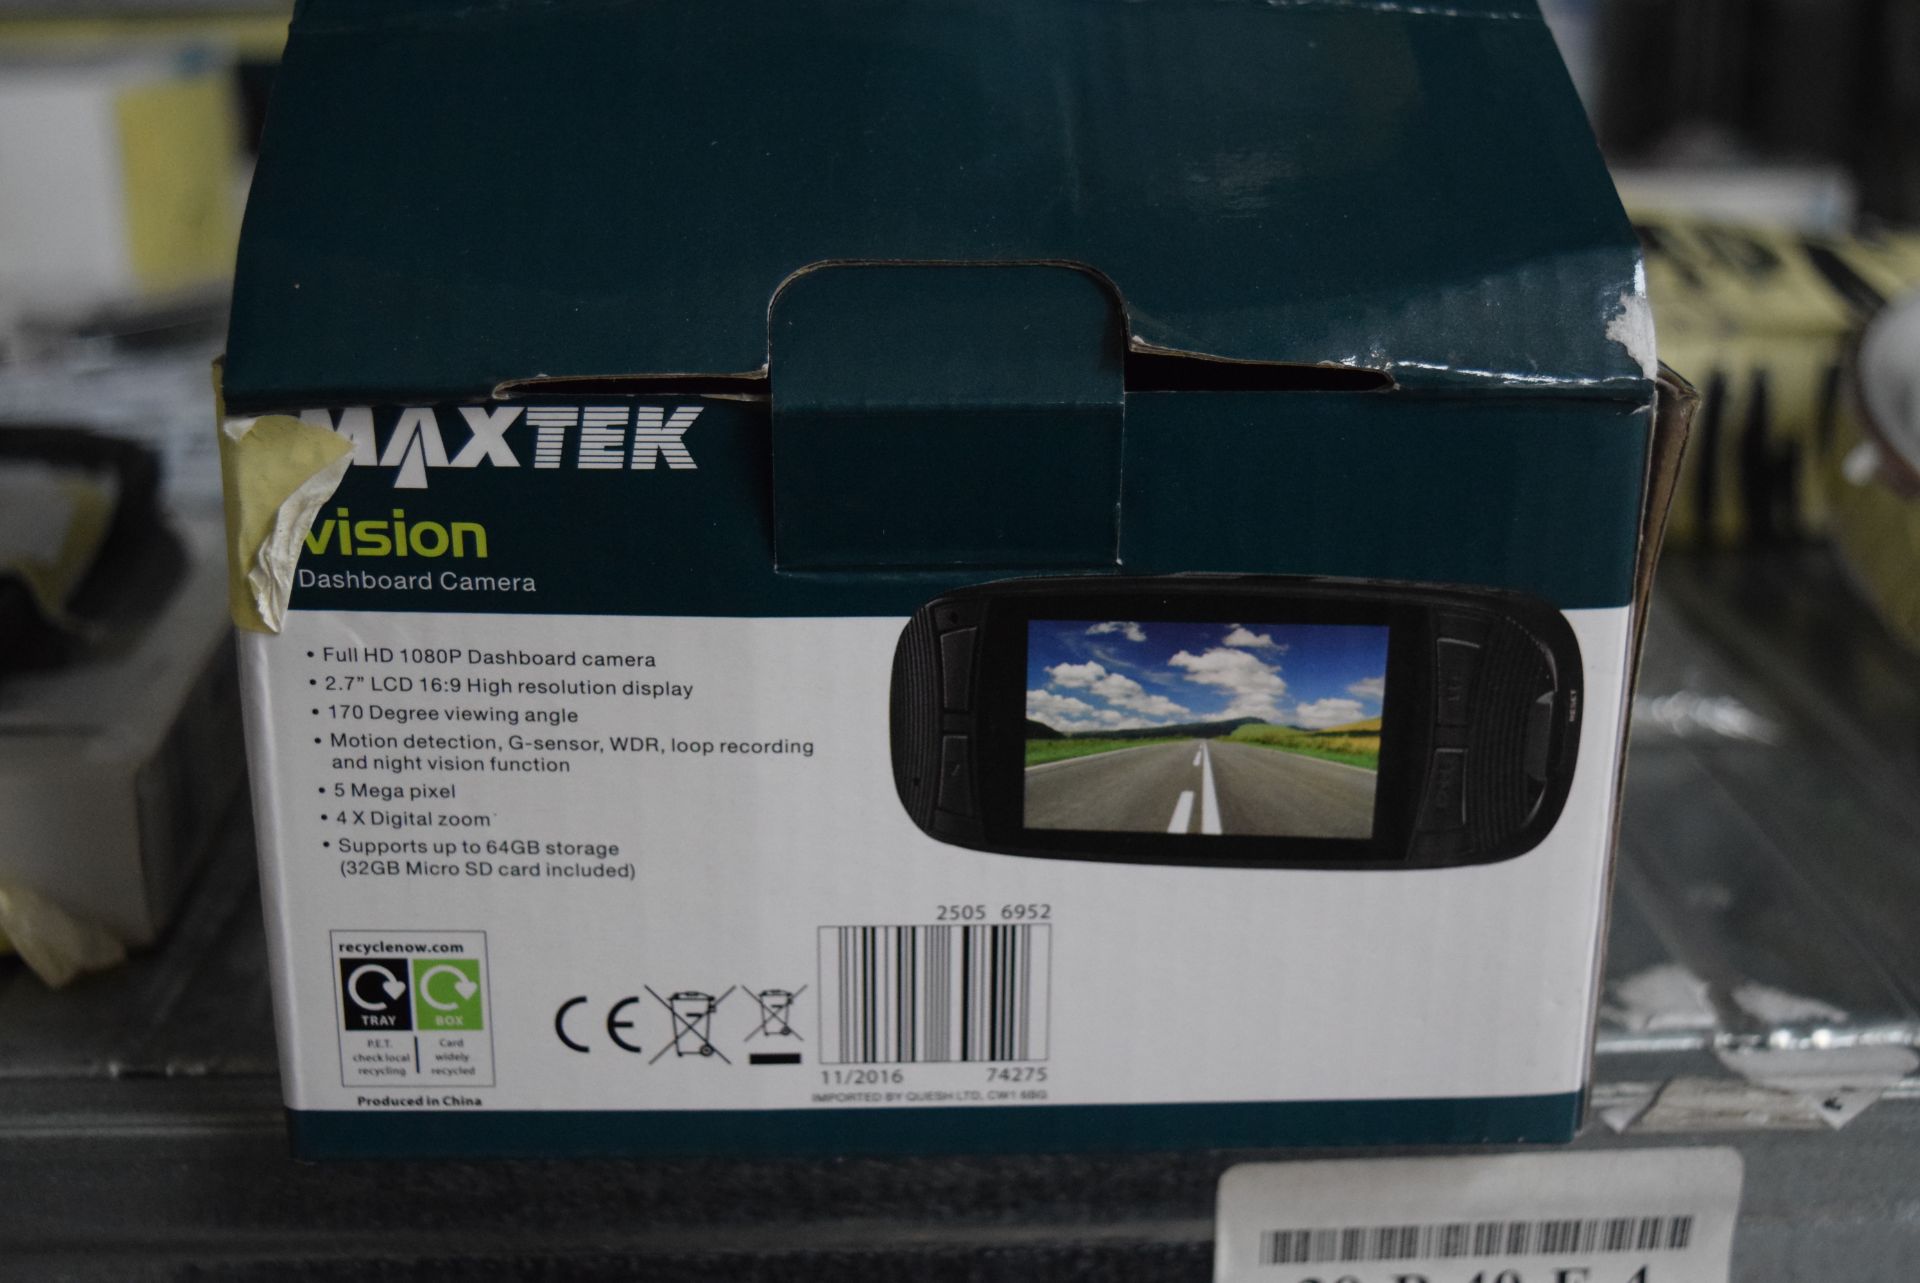 1 X BOXED MAXTEK VISION DASHBOARD CAMERA RRP £20 15.05.18